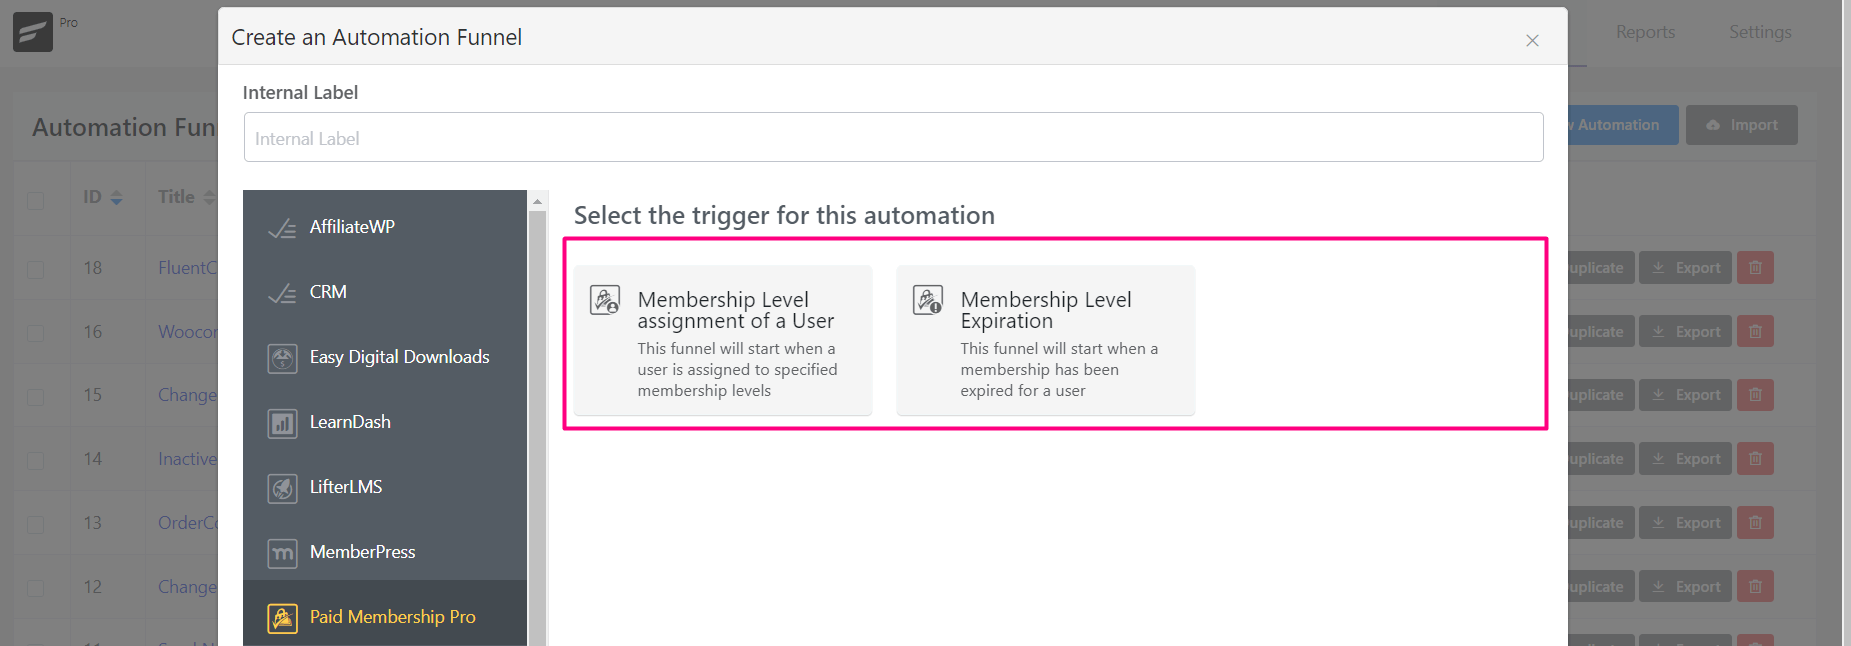 crm automation trigger pmpro